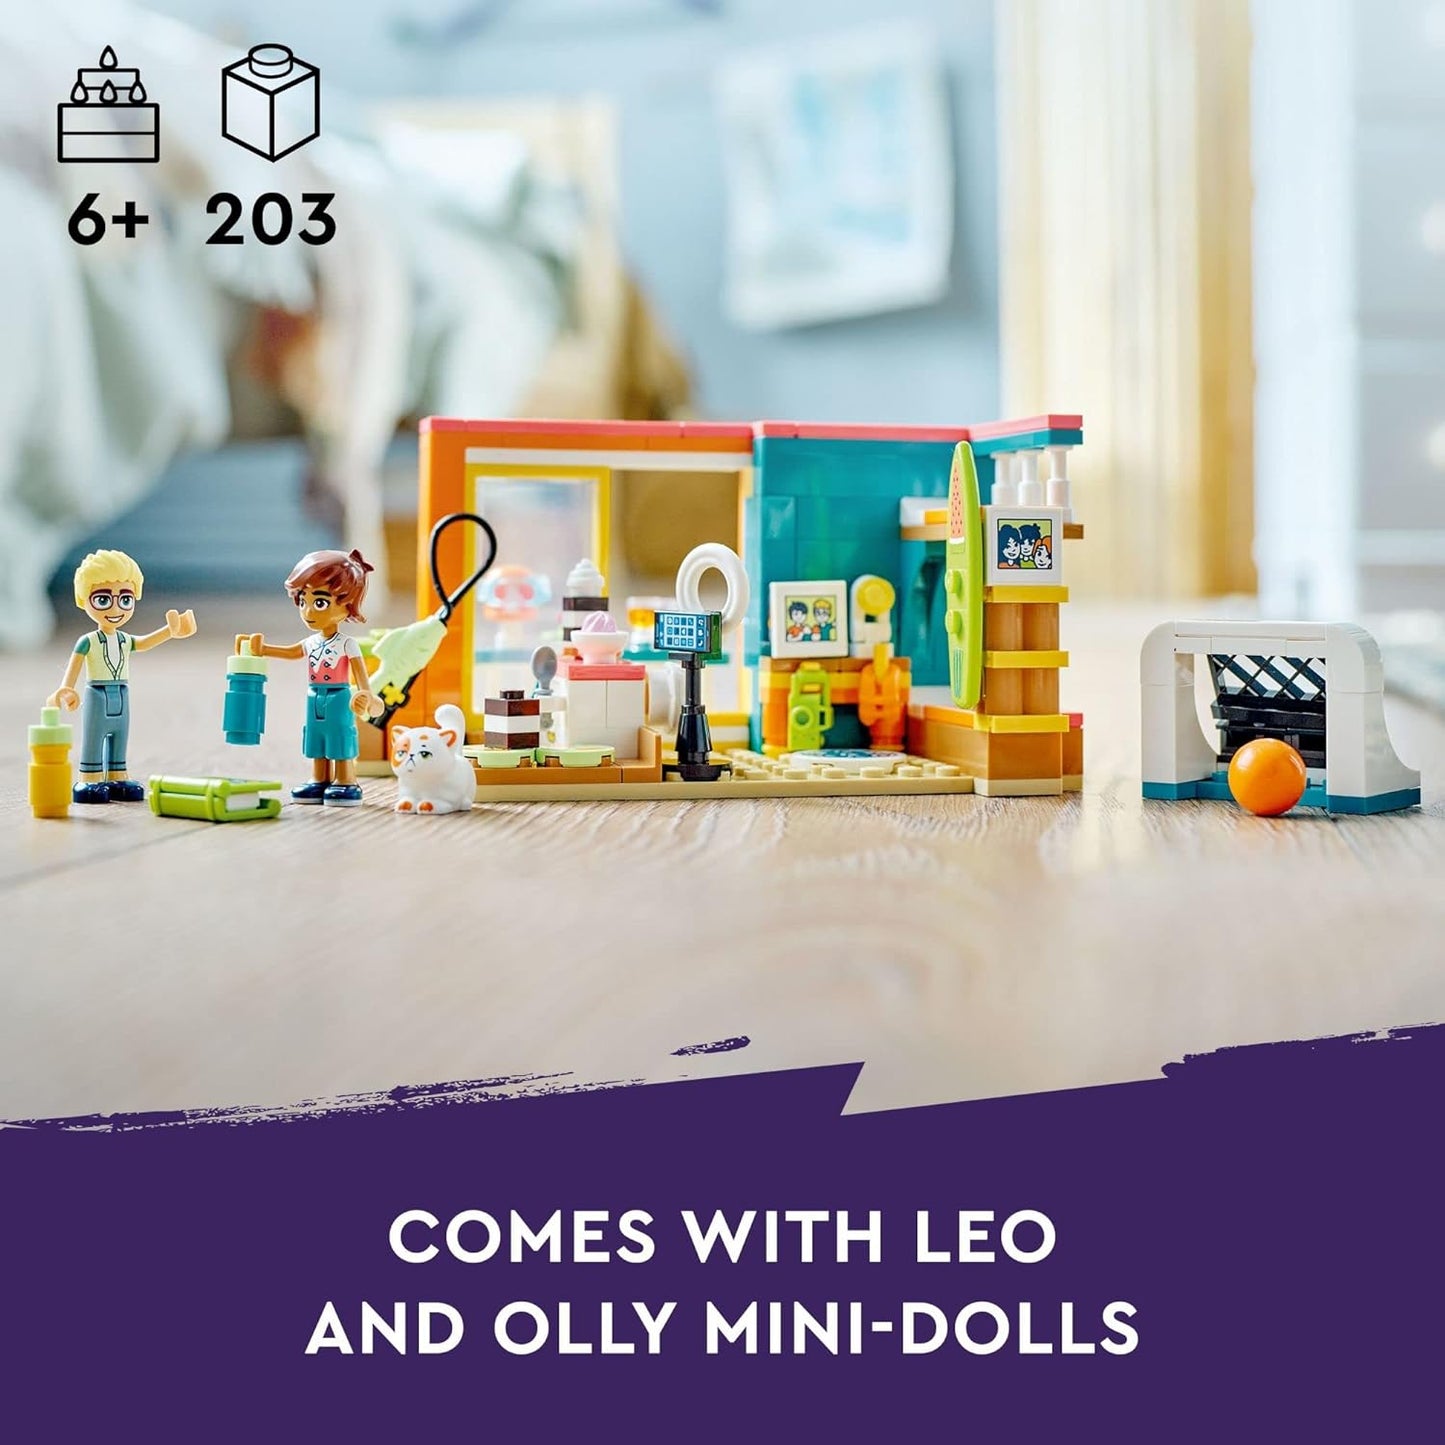 Lego Friends - Leo's Room 41754